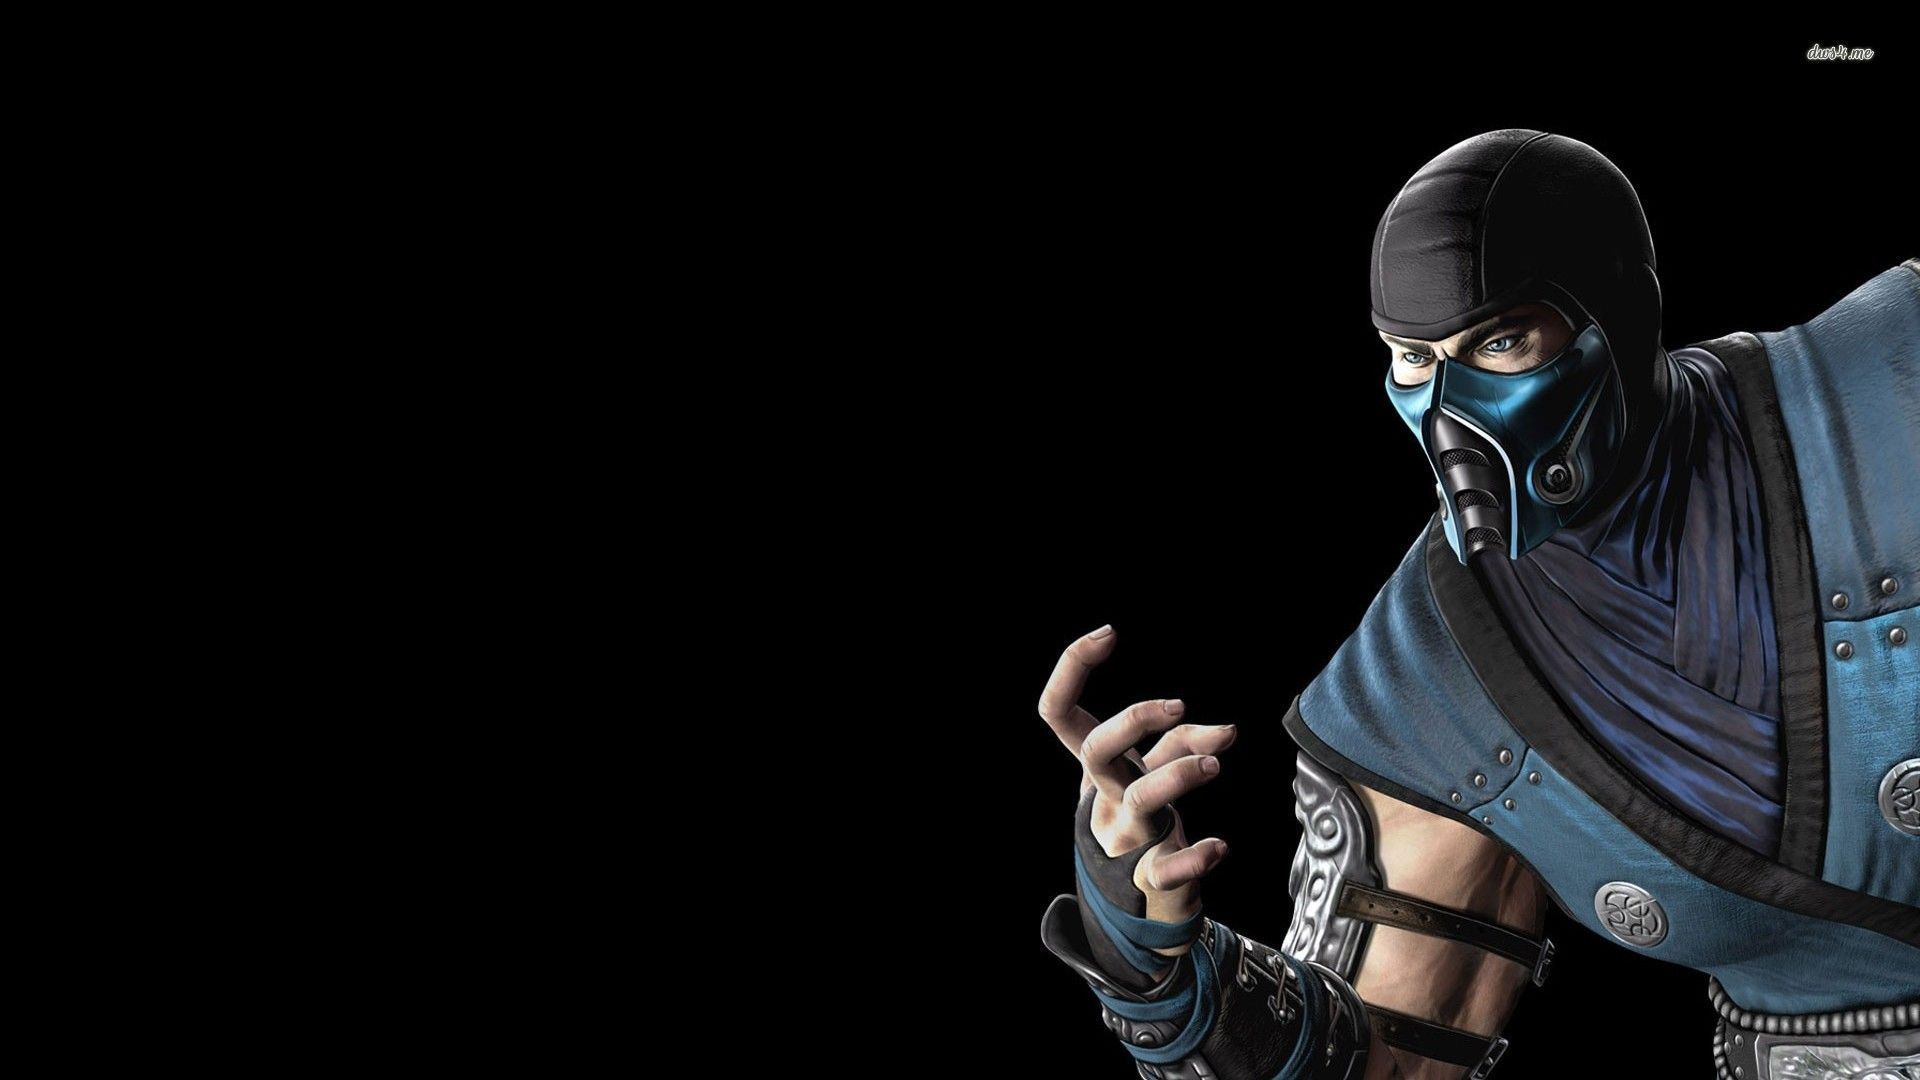 Sub Zero - Mortal Kombat wallpaper - Game wallpapers -